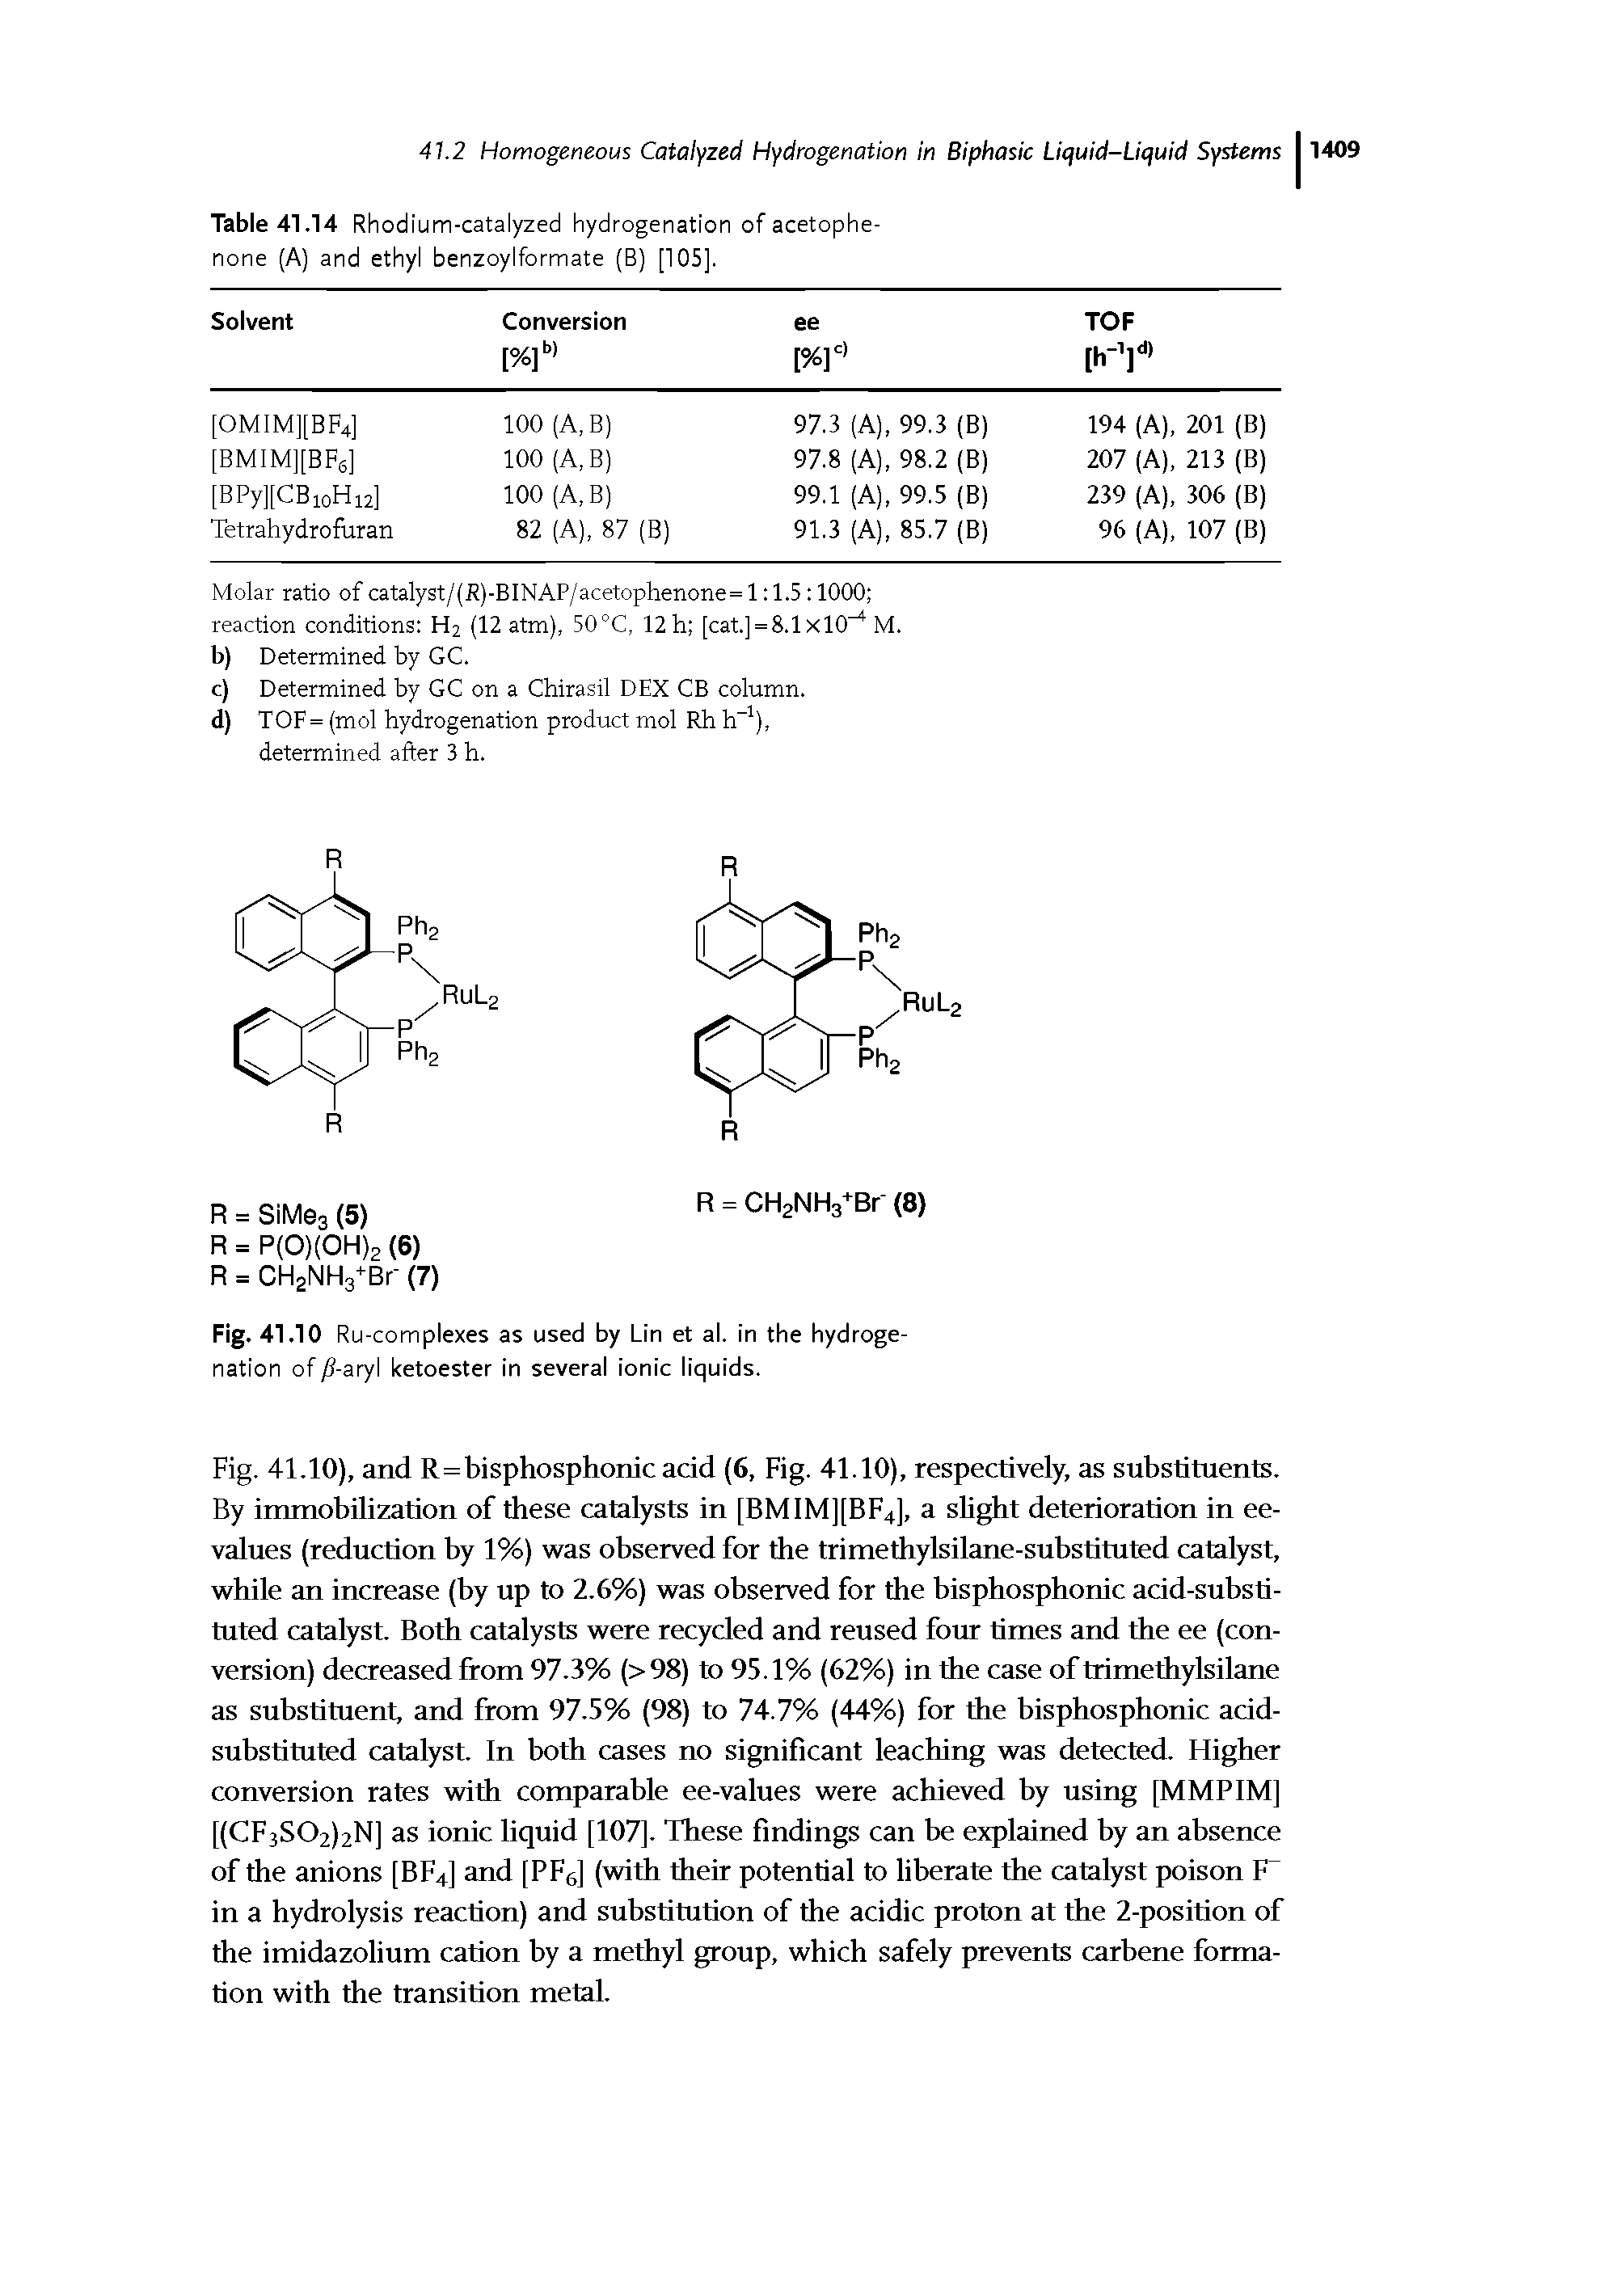 Table 41.14 Rhodi um-catalyzed hydrogenation of acetophenone (A) and ethyl benzoylformate (B) [105].